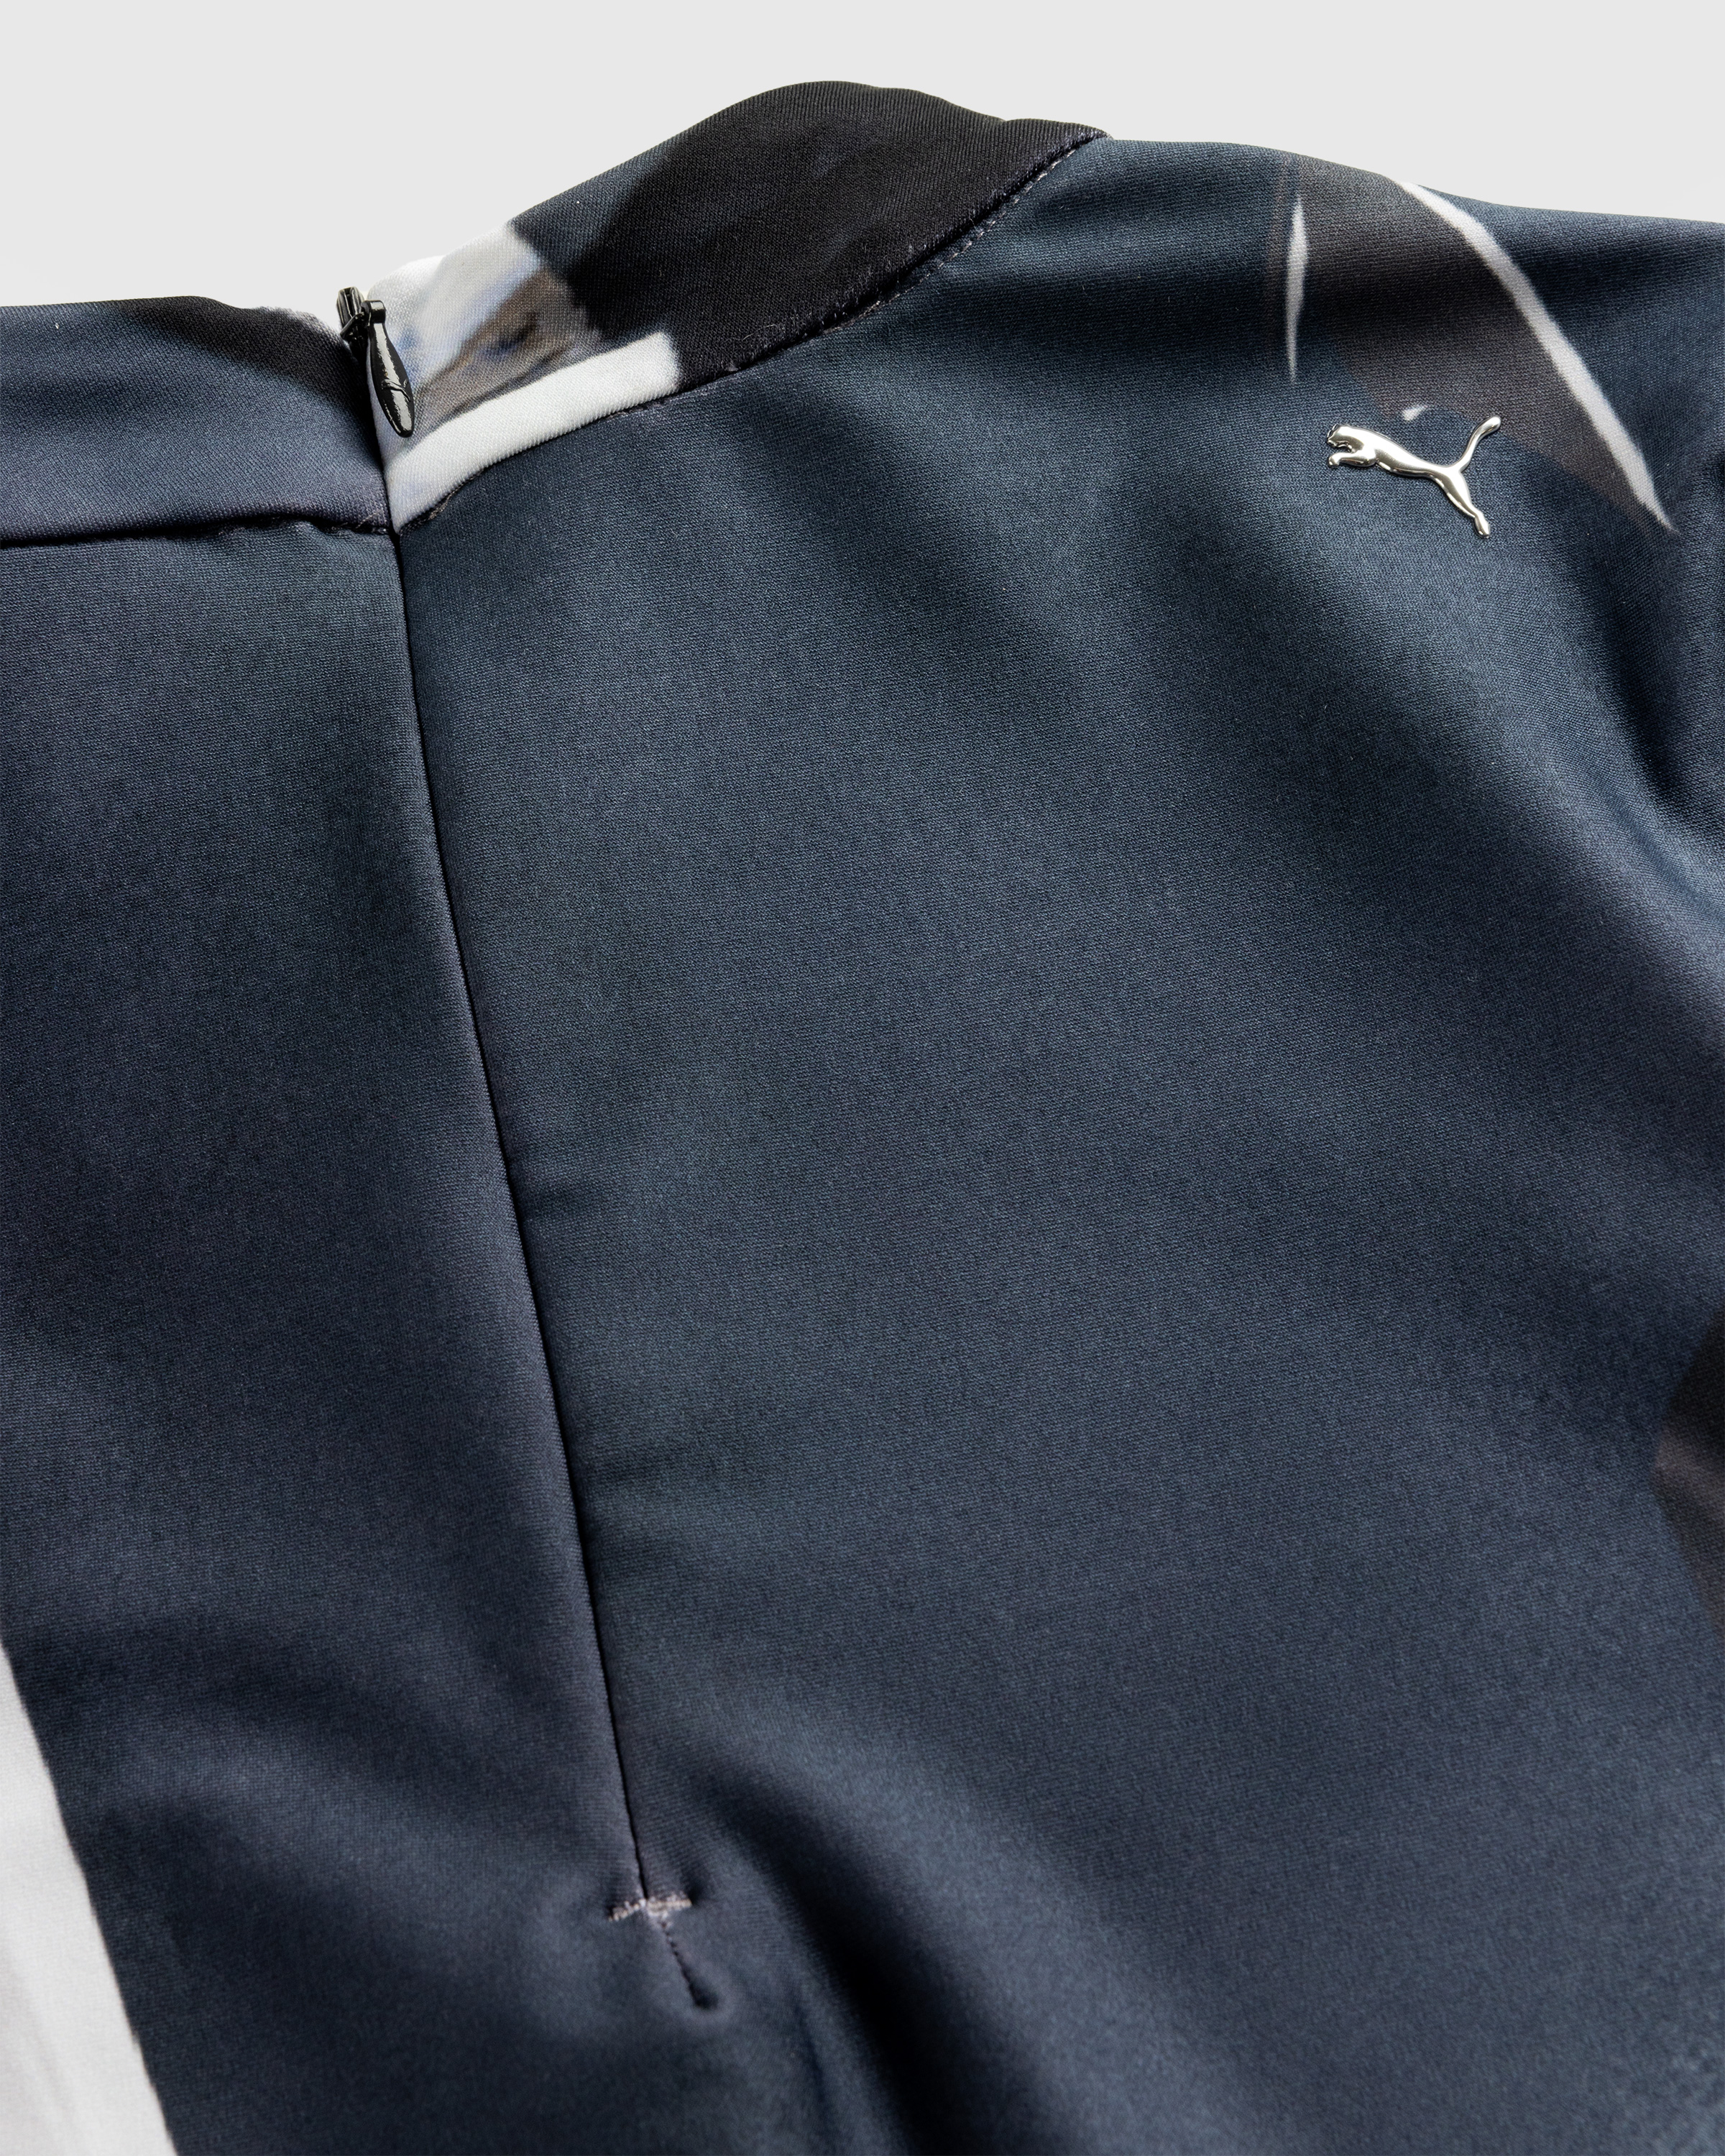 Puma x Ottolinger – Long-Sleeve Bodysuit Multi - Longsleeves - Multi - Image 4